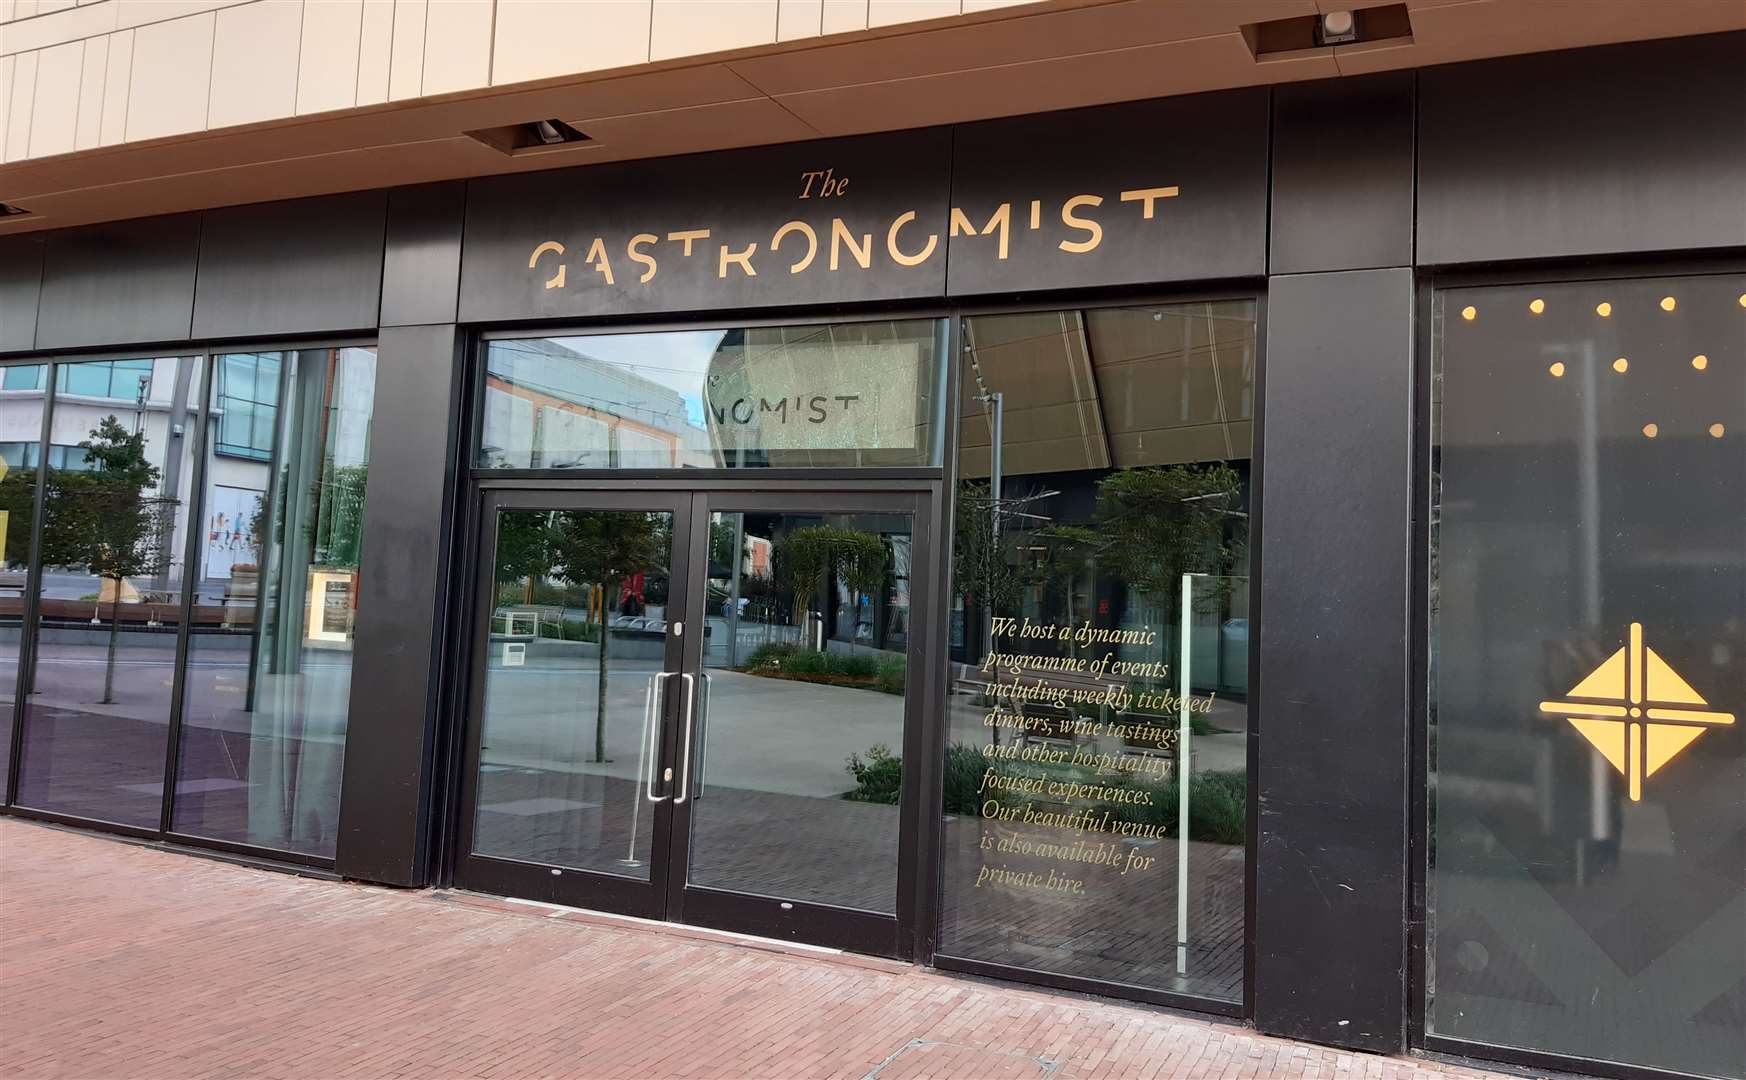 The Gastronomist restaurant closed after four months